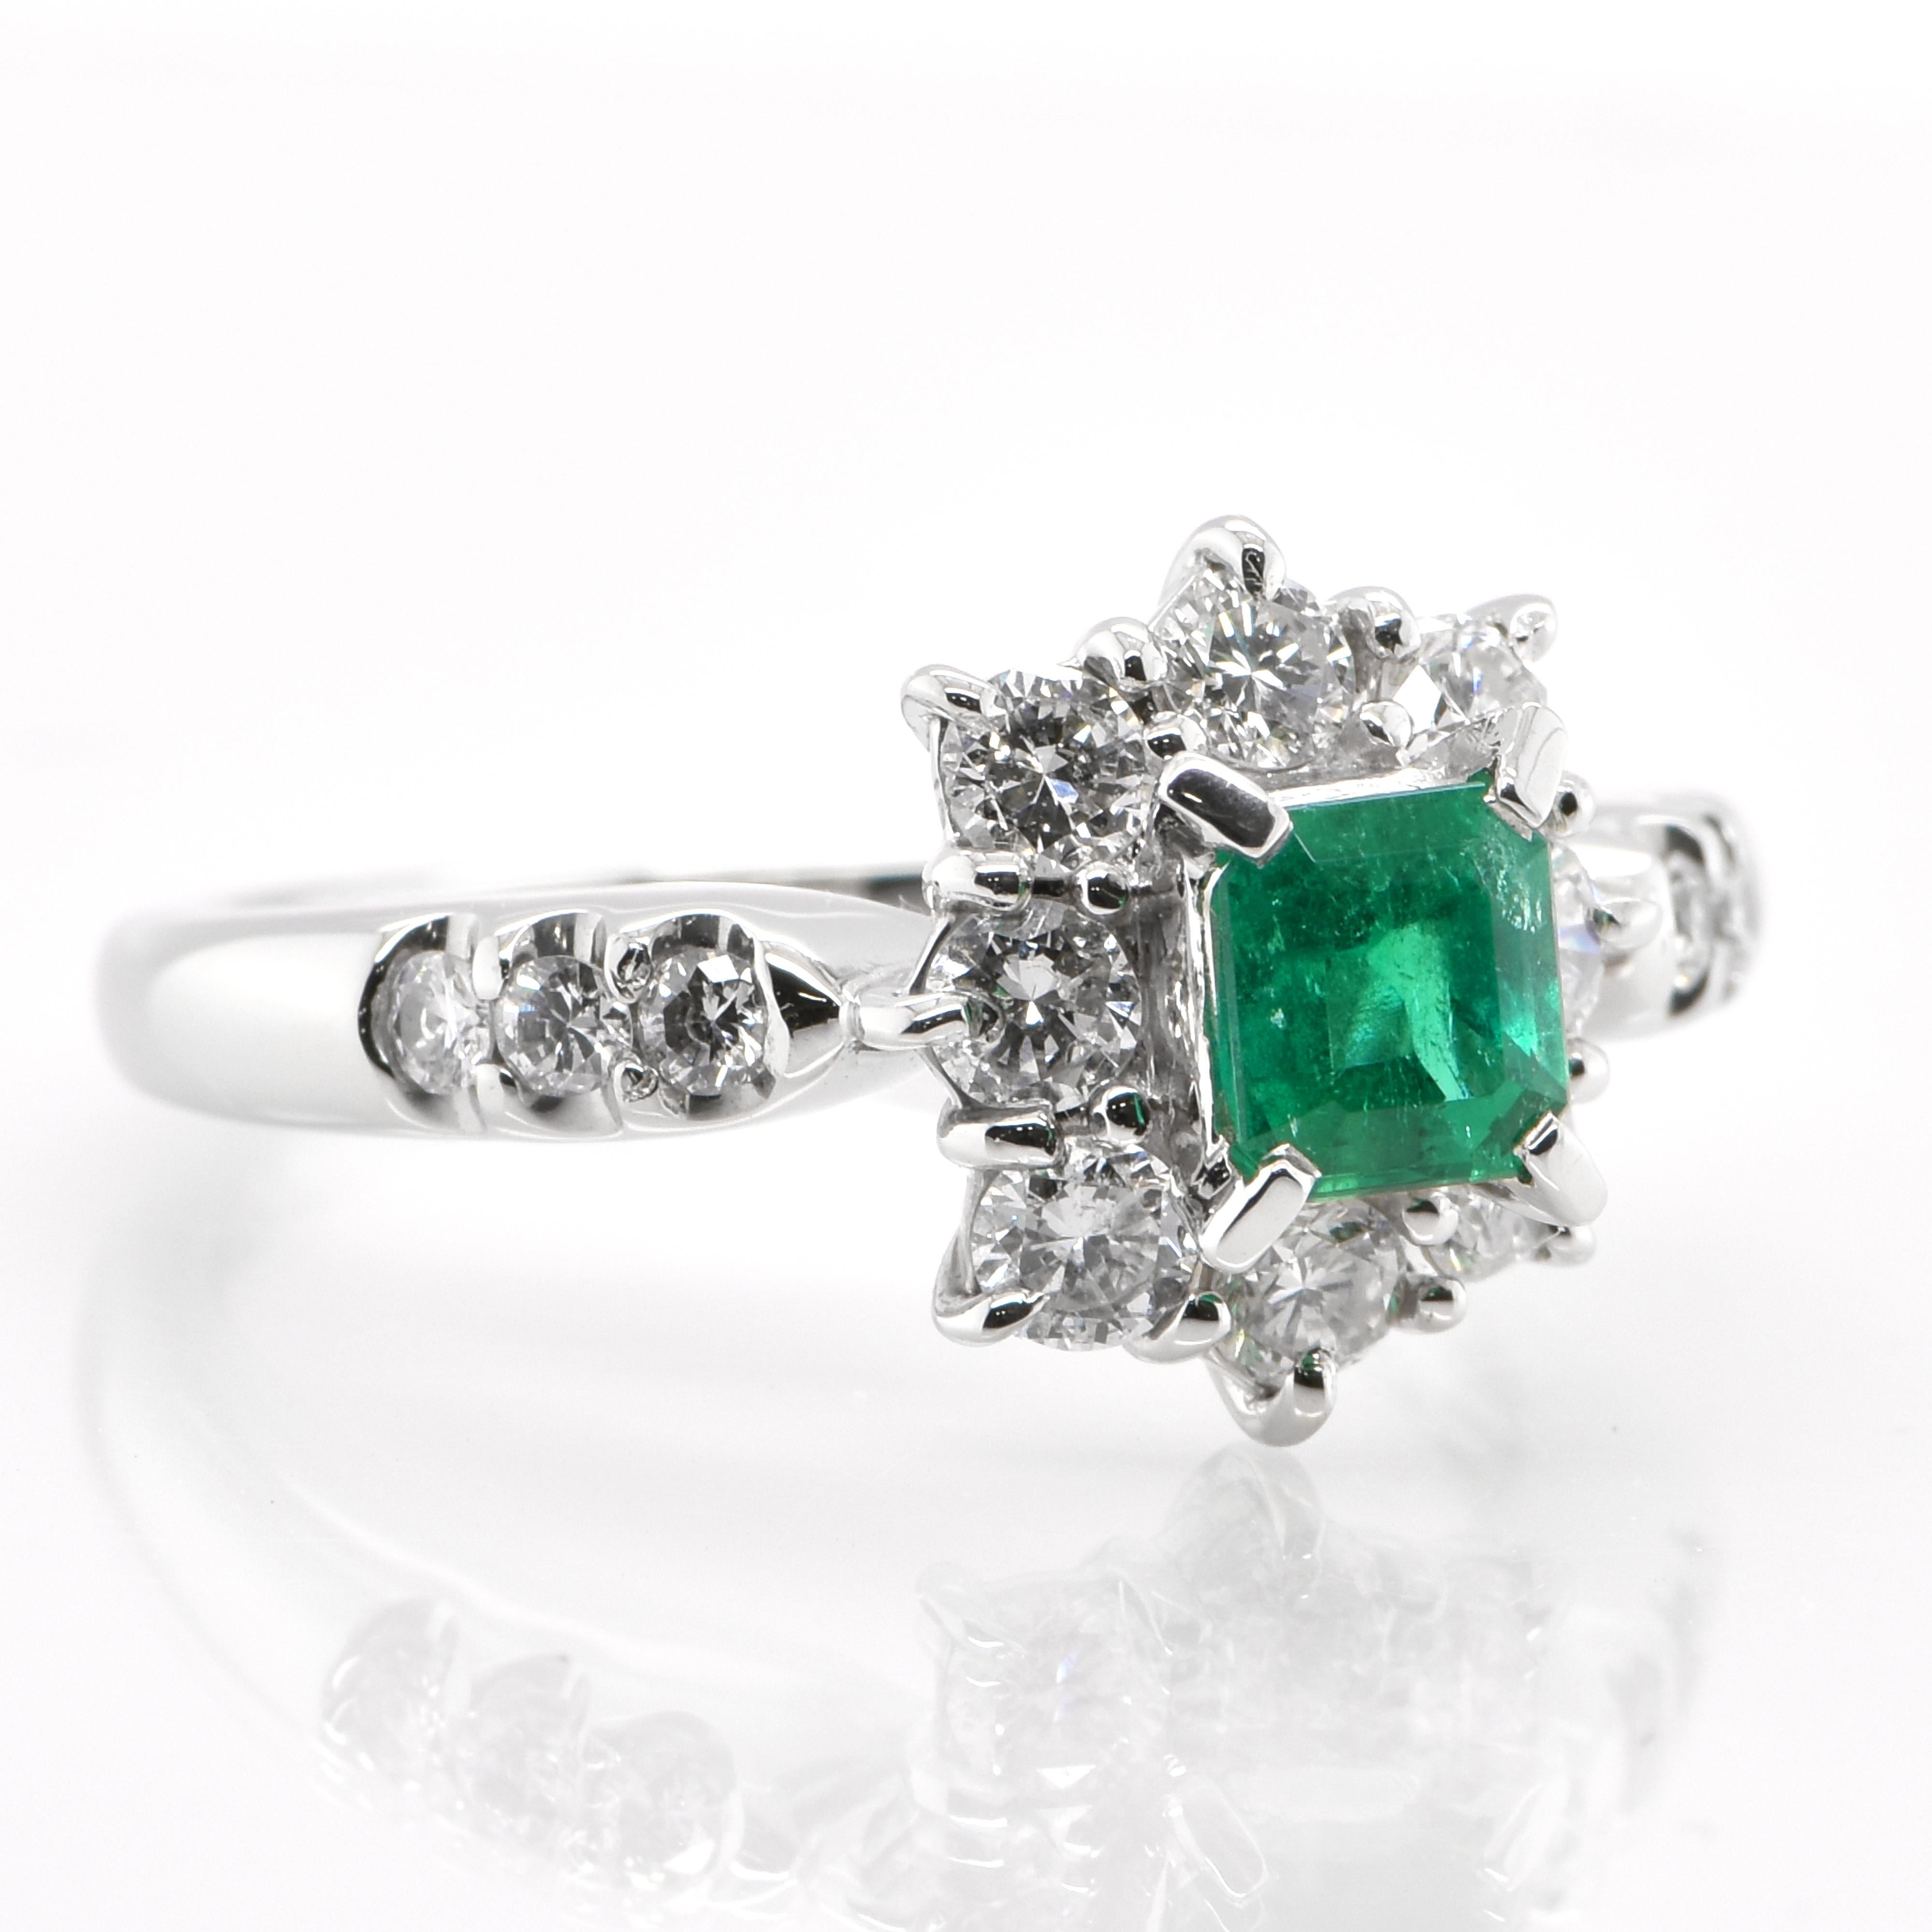 Modern 0.48 Carat Natural Emerald and Diamond Halo Ring Set in Platinum